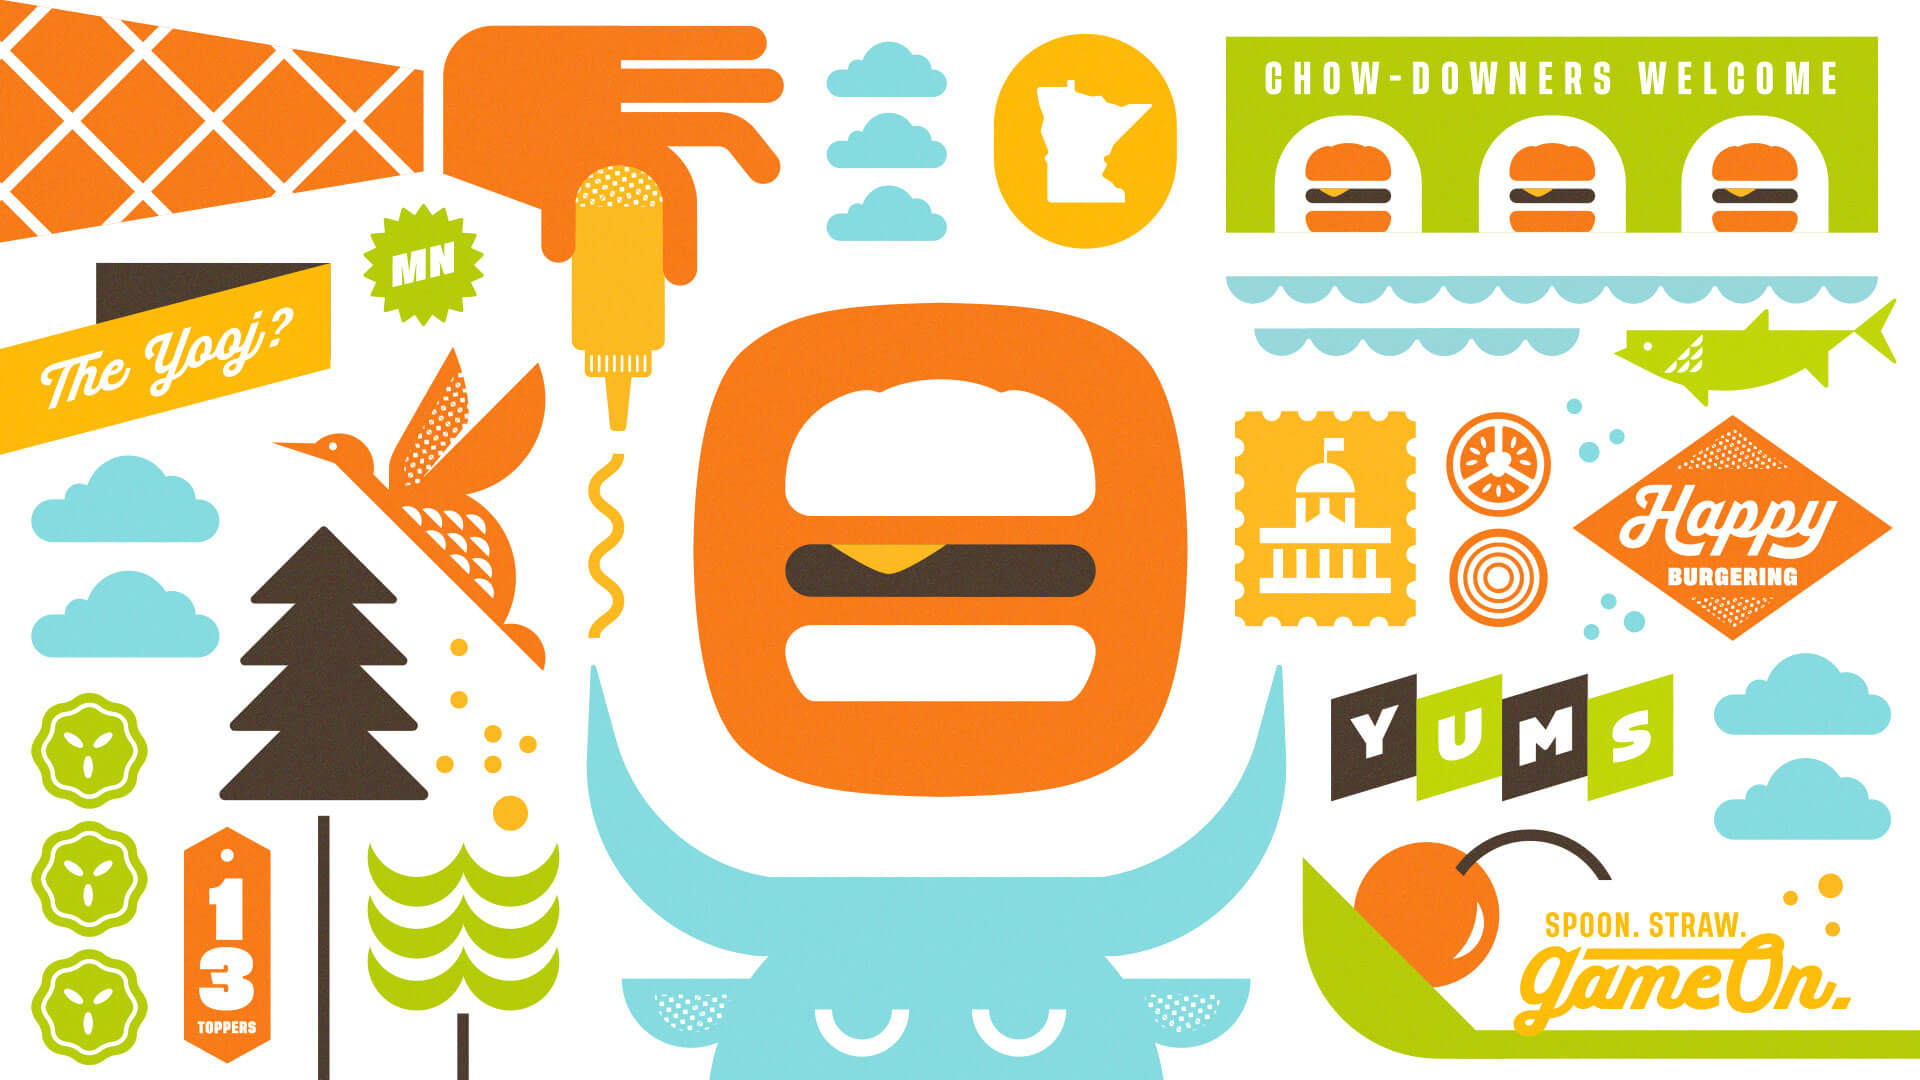 My Burger branding graphics.